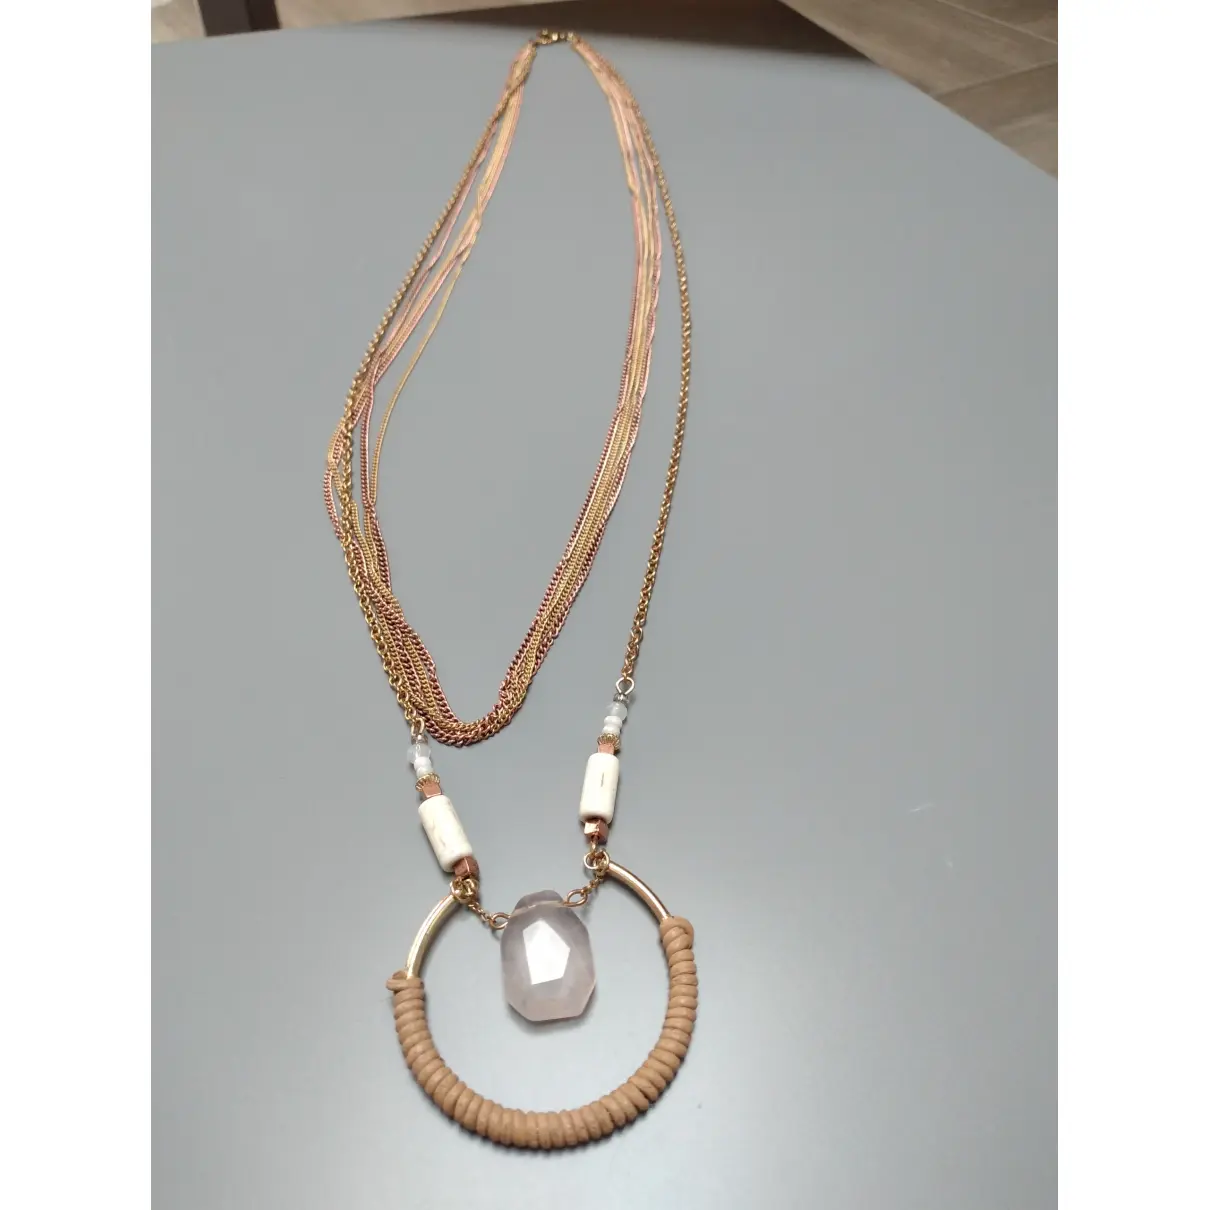 Buy American Vintage Necklace online